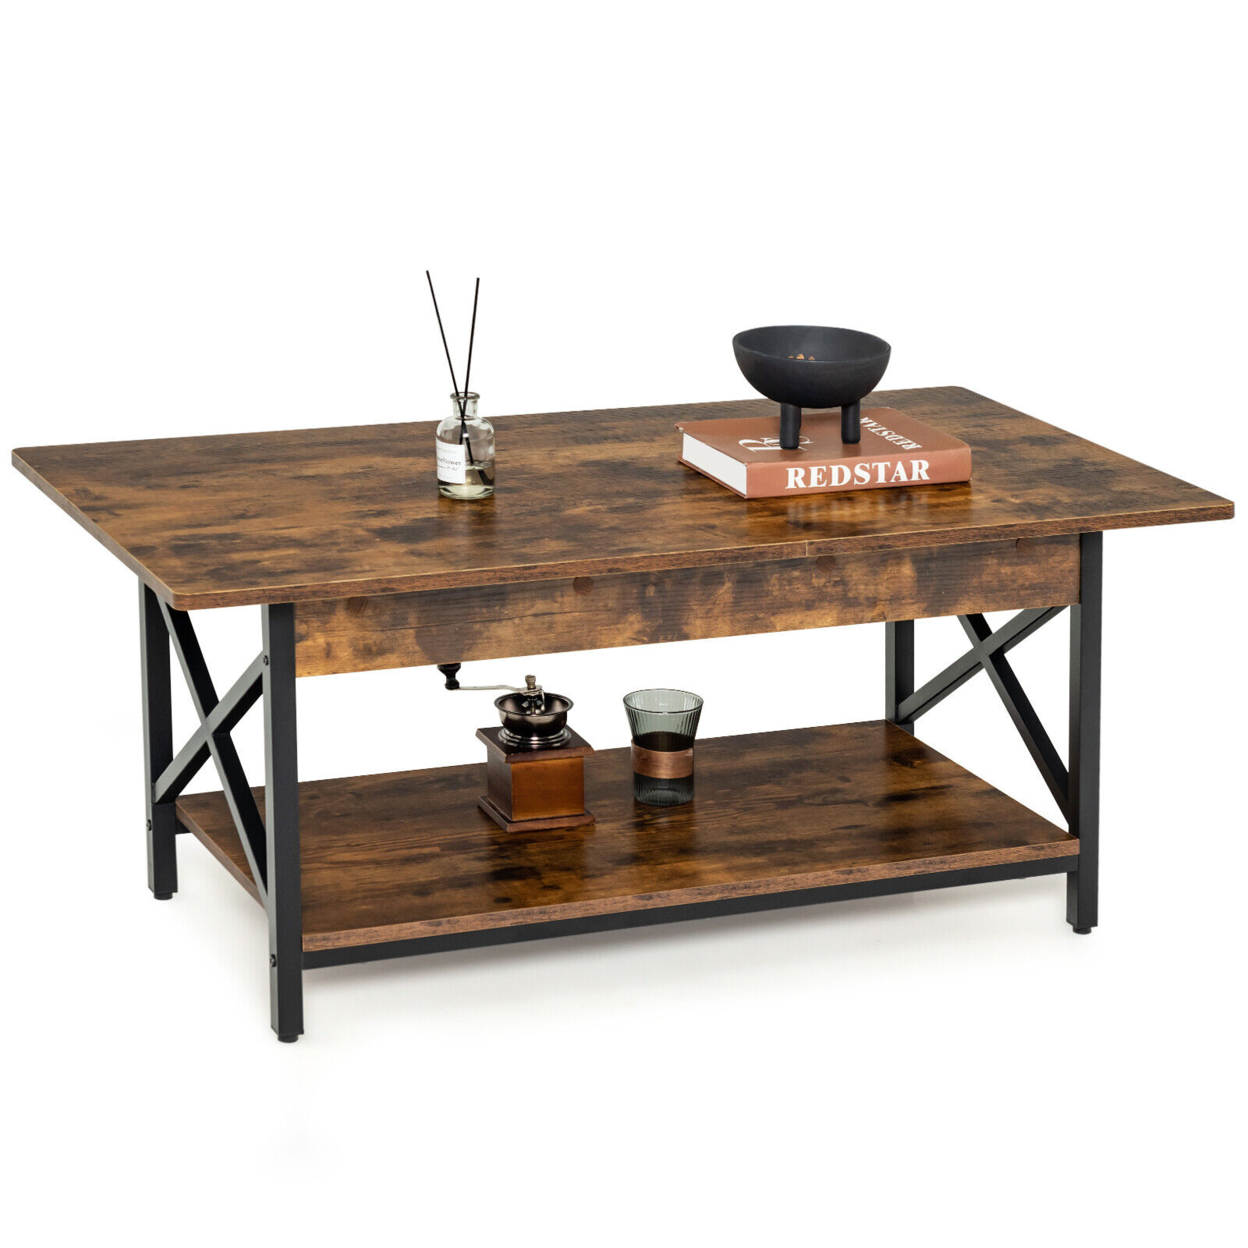 Coffee Table Industrial 2-Tier W/ Storage Shelf &Storage Shelf For Living Room - Rustic Brown